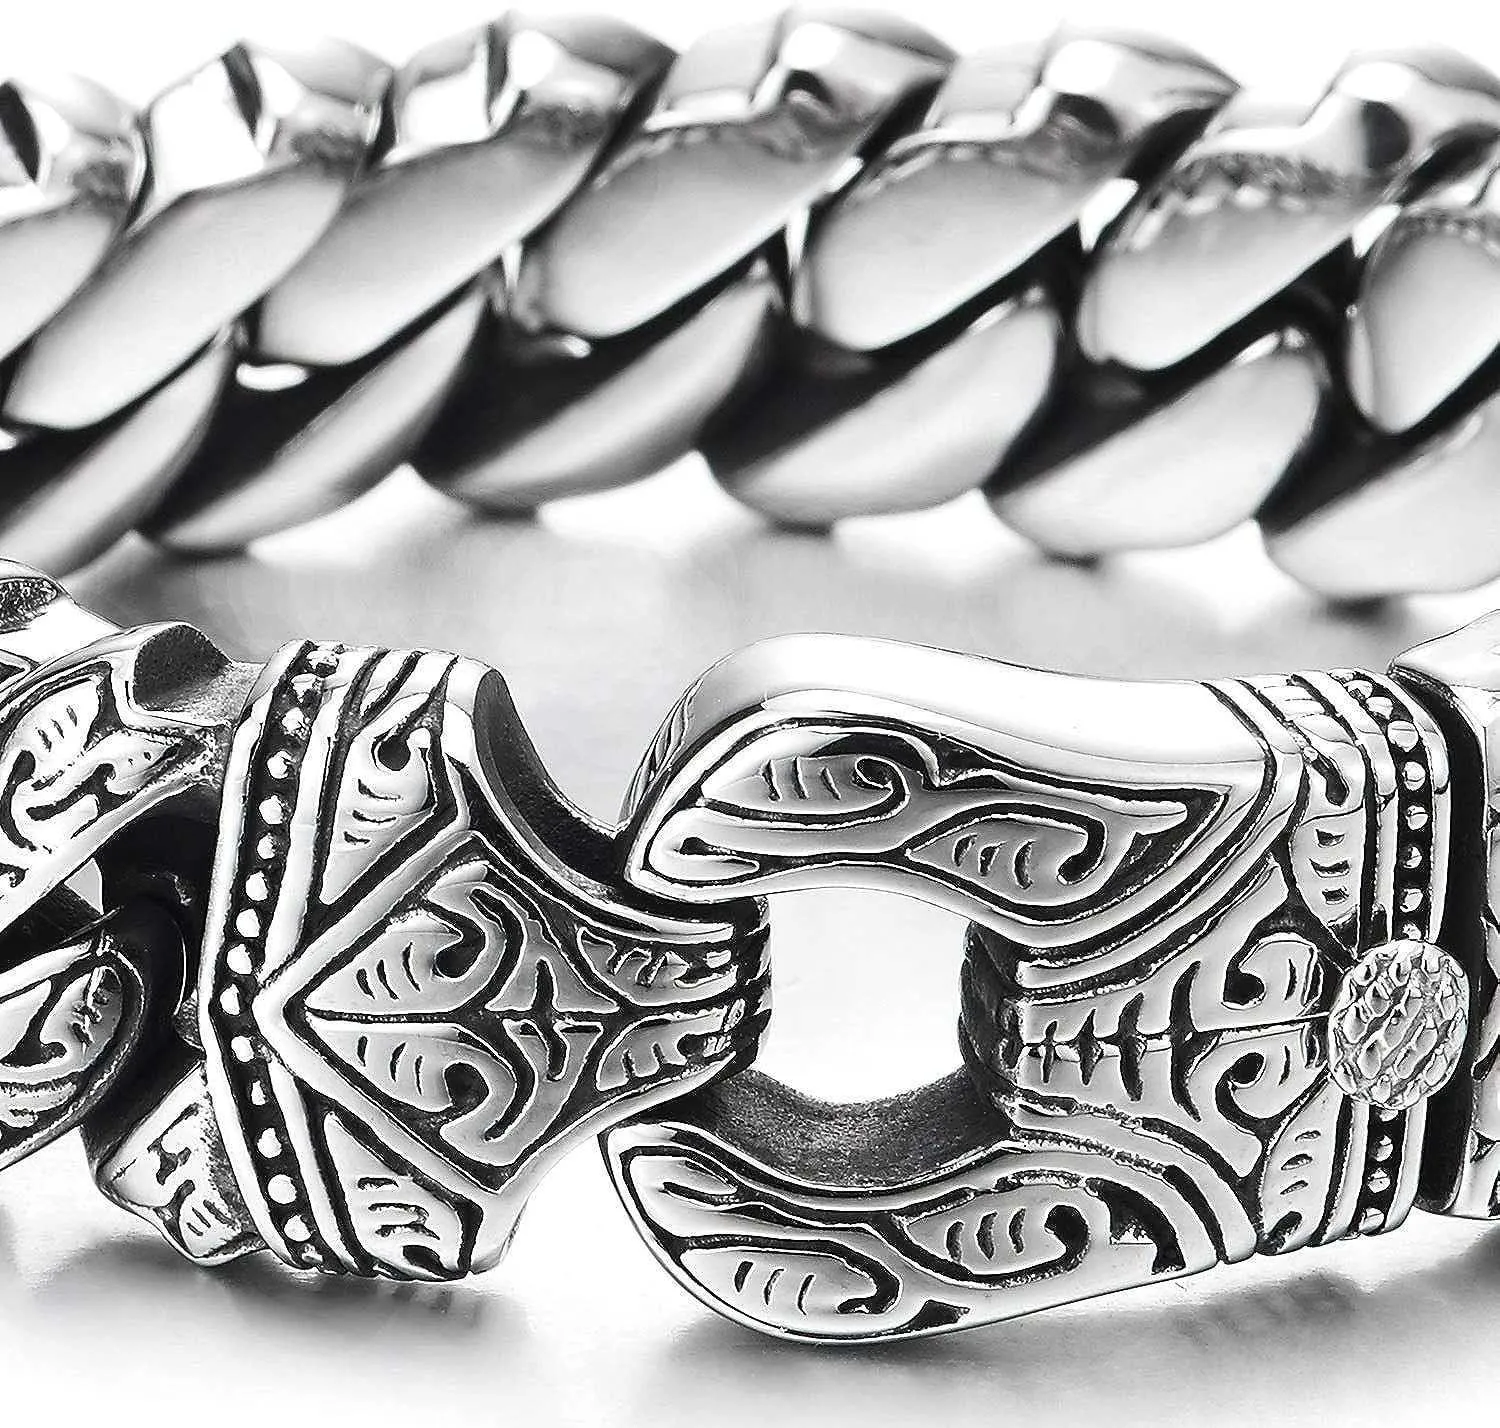 Jay balaji Hand-Crafted Design Silver Color Bracelet Kada for Men - Style  B190 – Soni Fashion®